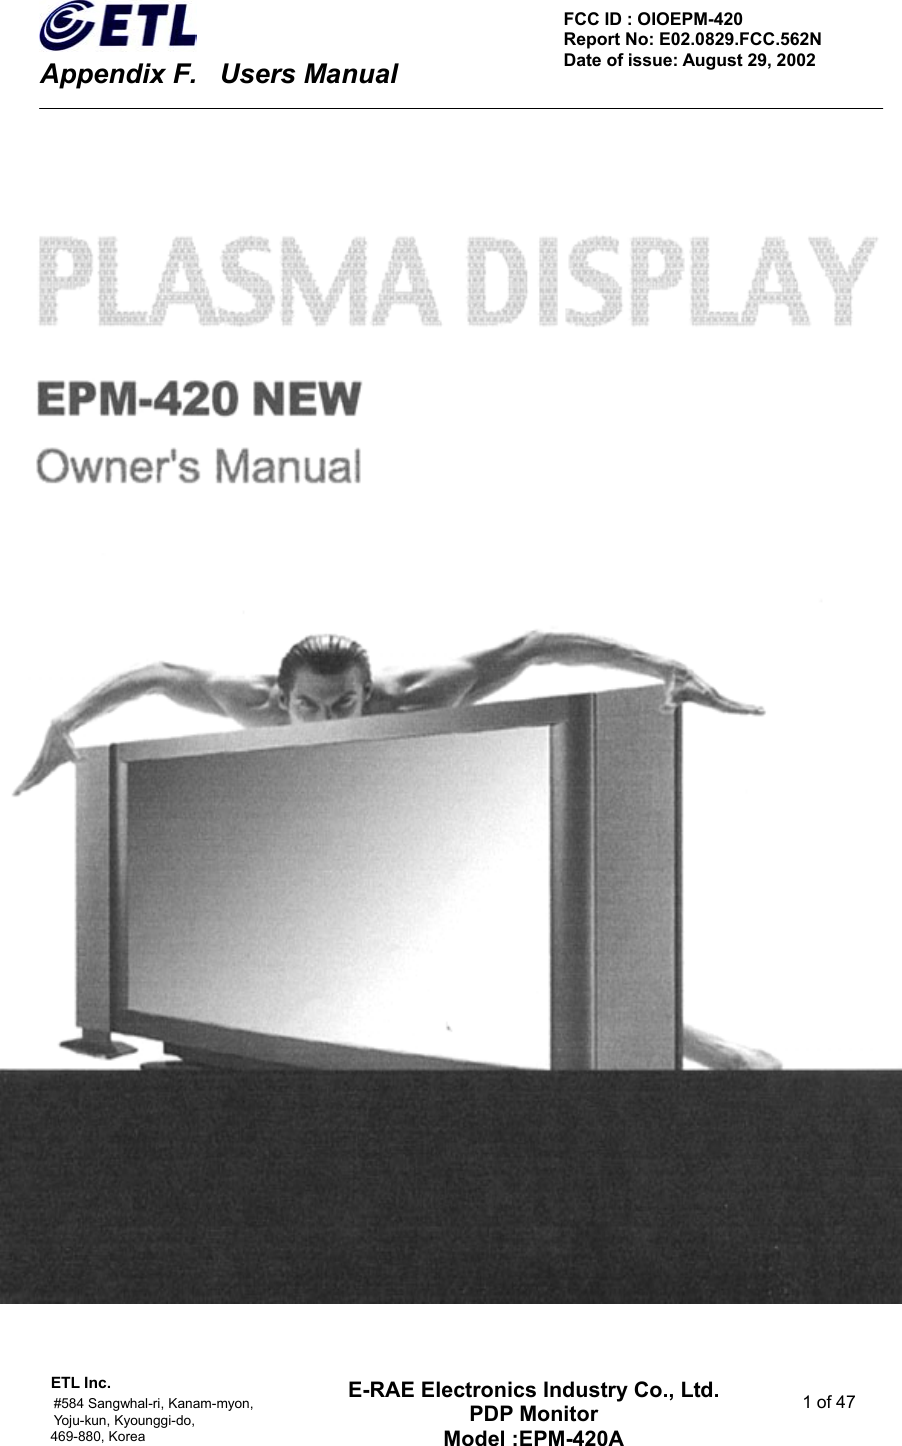    Appendix F.    Users Manual ETL Inc.                                                                                    #584 Sangwhal-ri, Kanam-myon,  1 of 47 Yoju-kun, Kyounggi-do,  469-880, Korea     FCC ID : OIOEPM-420   Report No: E02.0829.FCC.562N   Date of issue: August 29, 2002 E-RAE Electronics Industry Co., Ltd. PDP Monitor Model :EPM-420A                                    